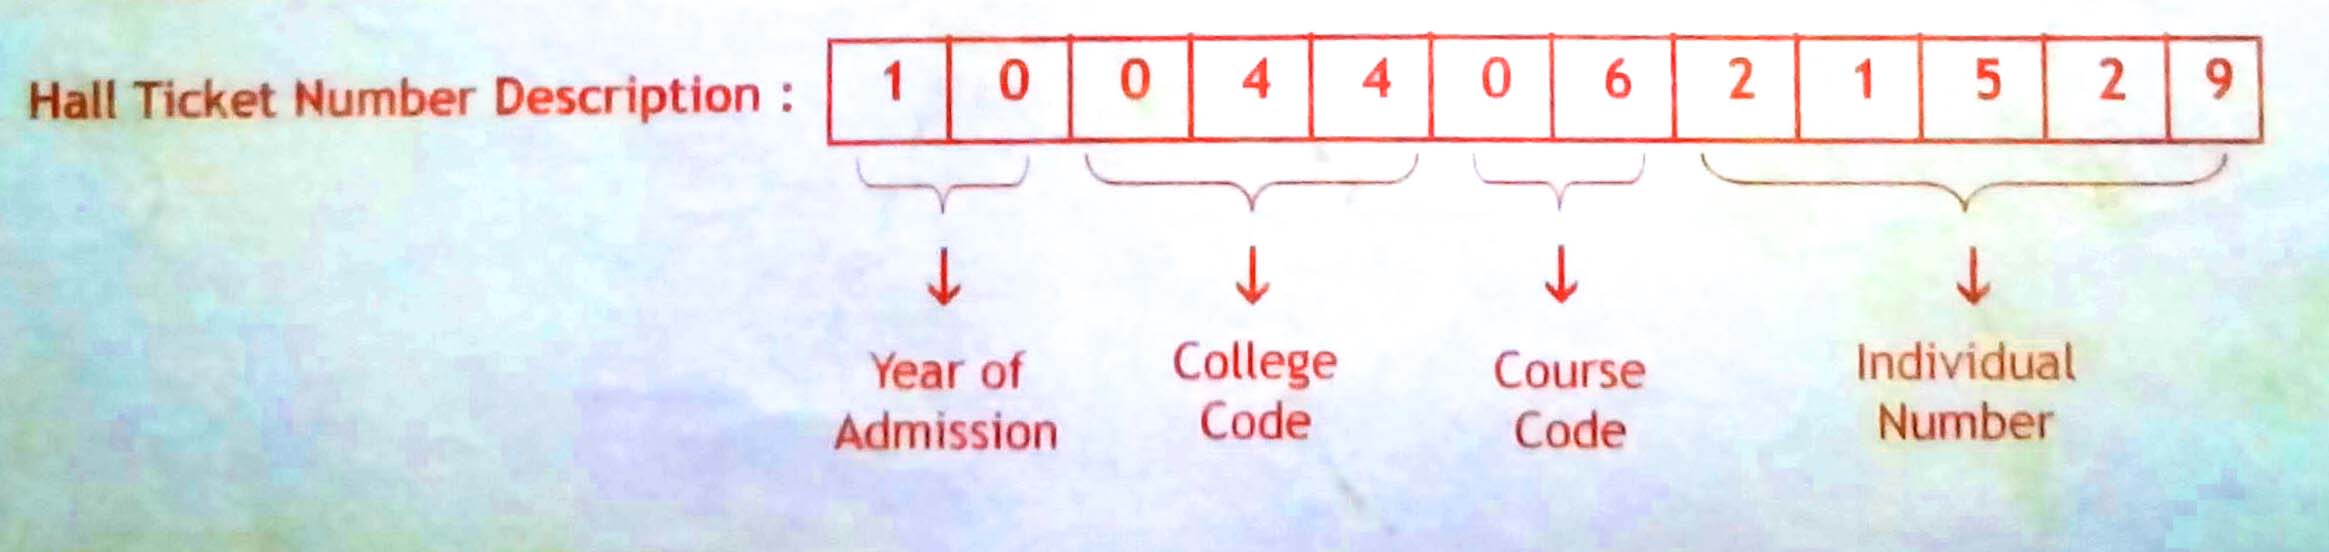 YVU-Undergraduate-Hall-Ticket- Number-Description